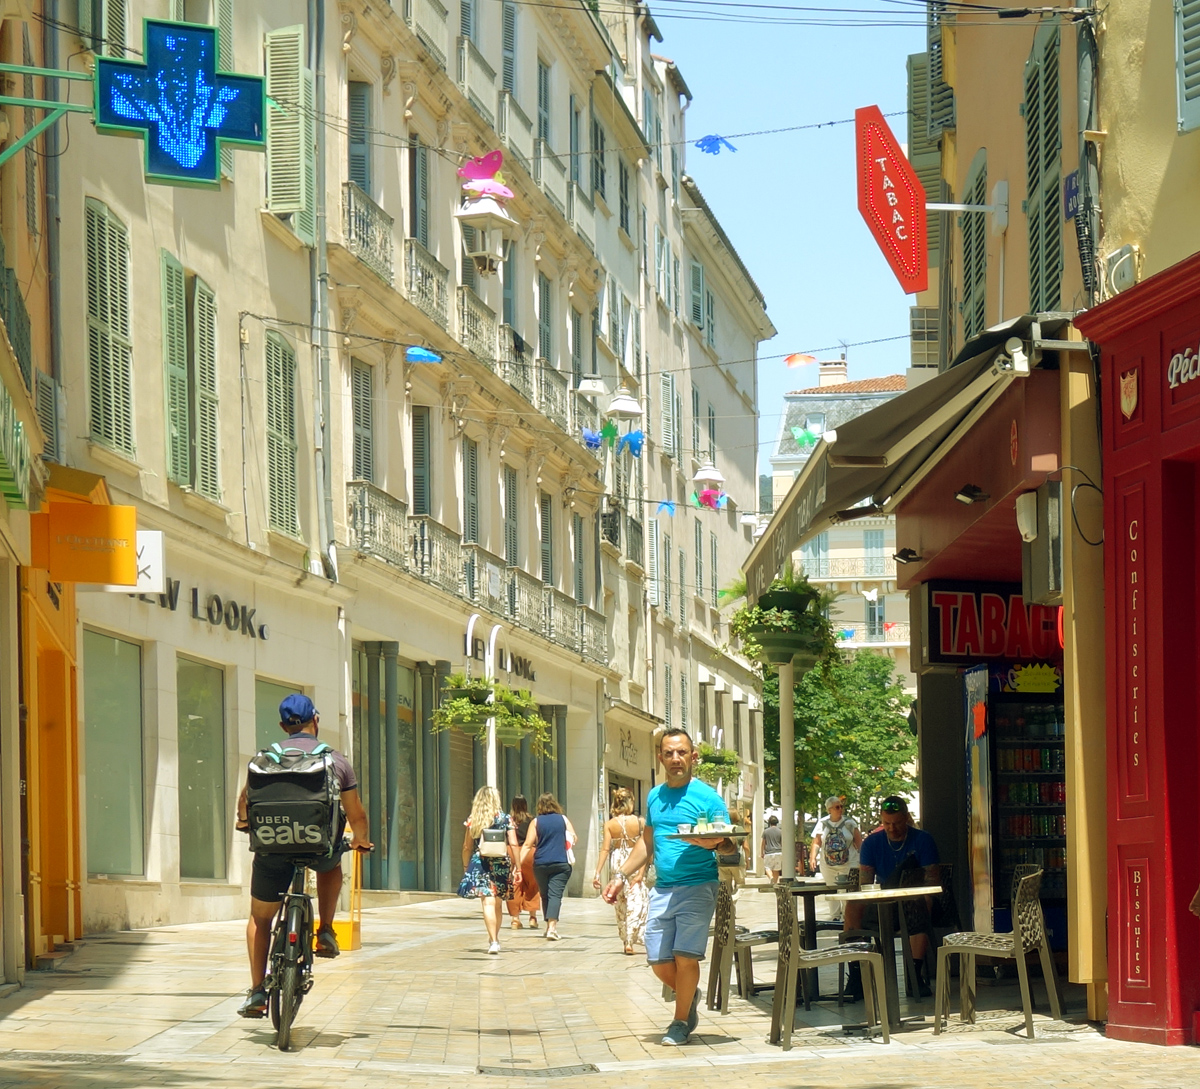 Toulon in Farbe.jpg